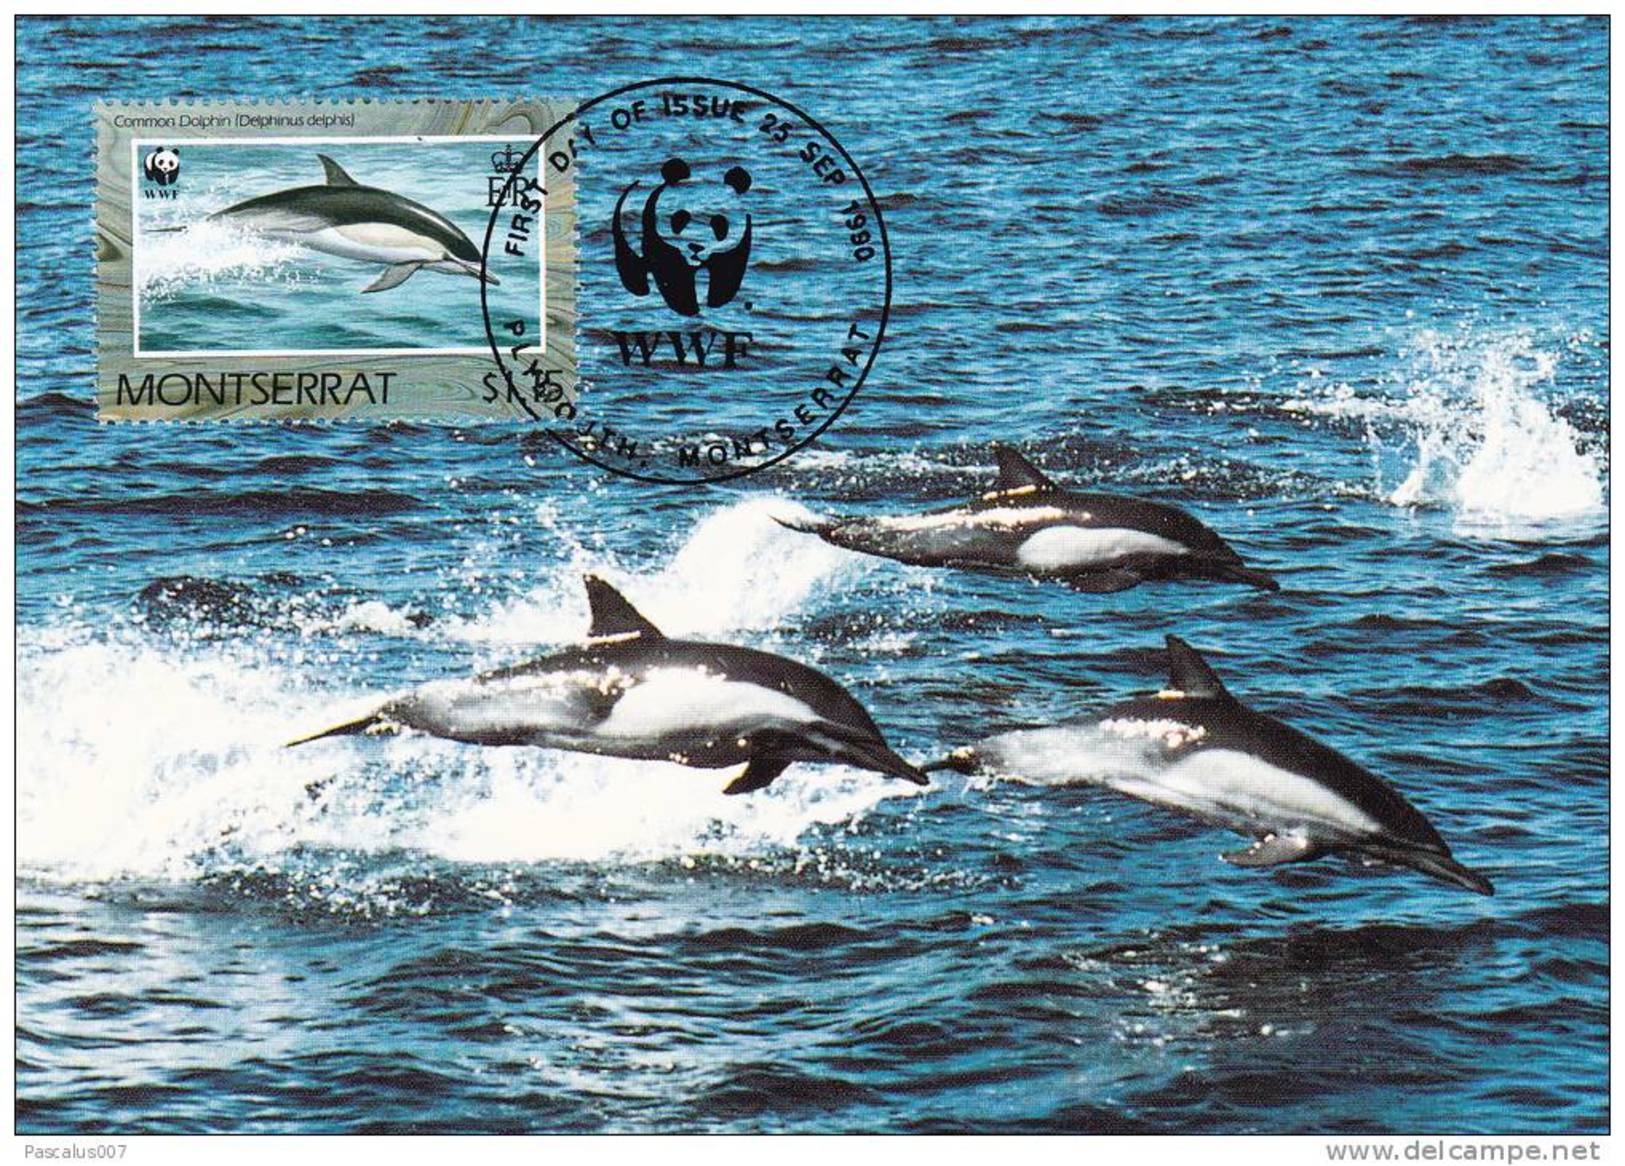 WWF - 103,32 - CM-MC - &euro; 1,06 - 25-9-1990 - $1,15 - Dolphins - Montserrat 1094212 - Montserrat